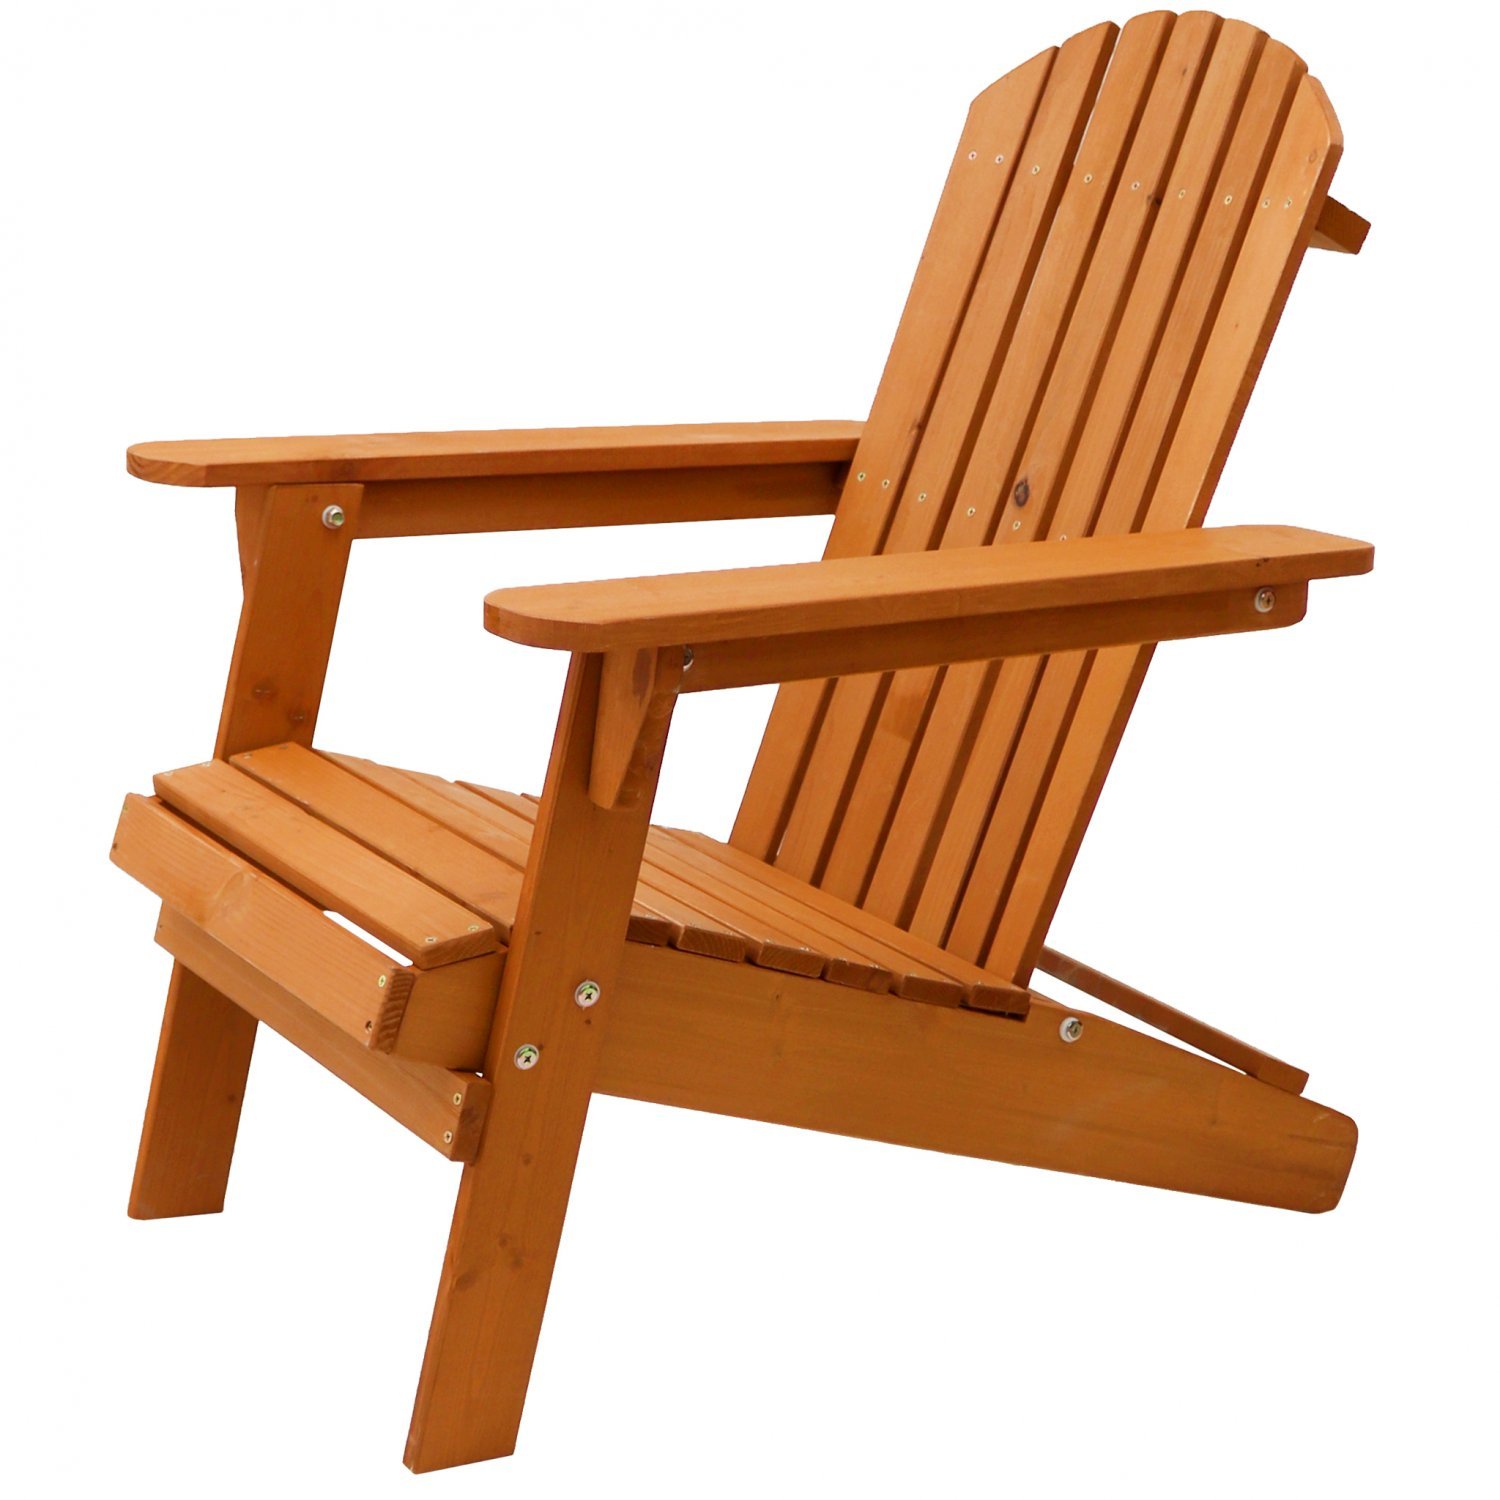 Wooden Outdoor Garden Adirondack Chair Patio Furniture - £49.99 : Oypla